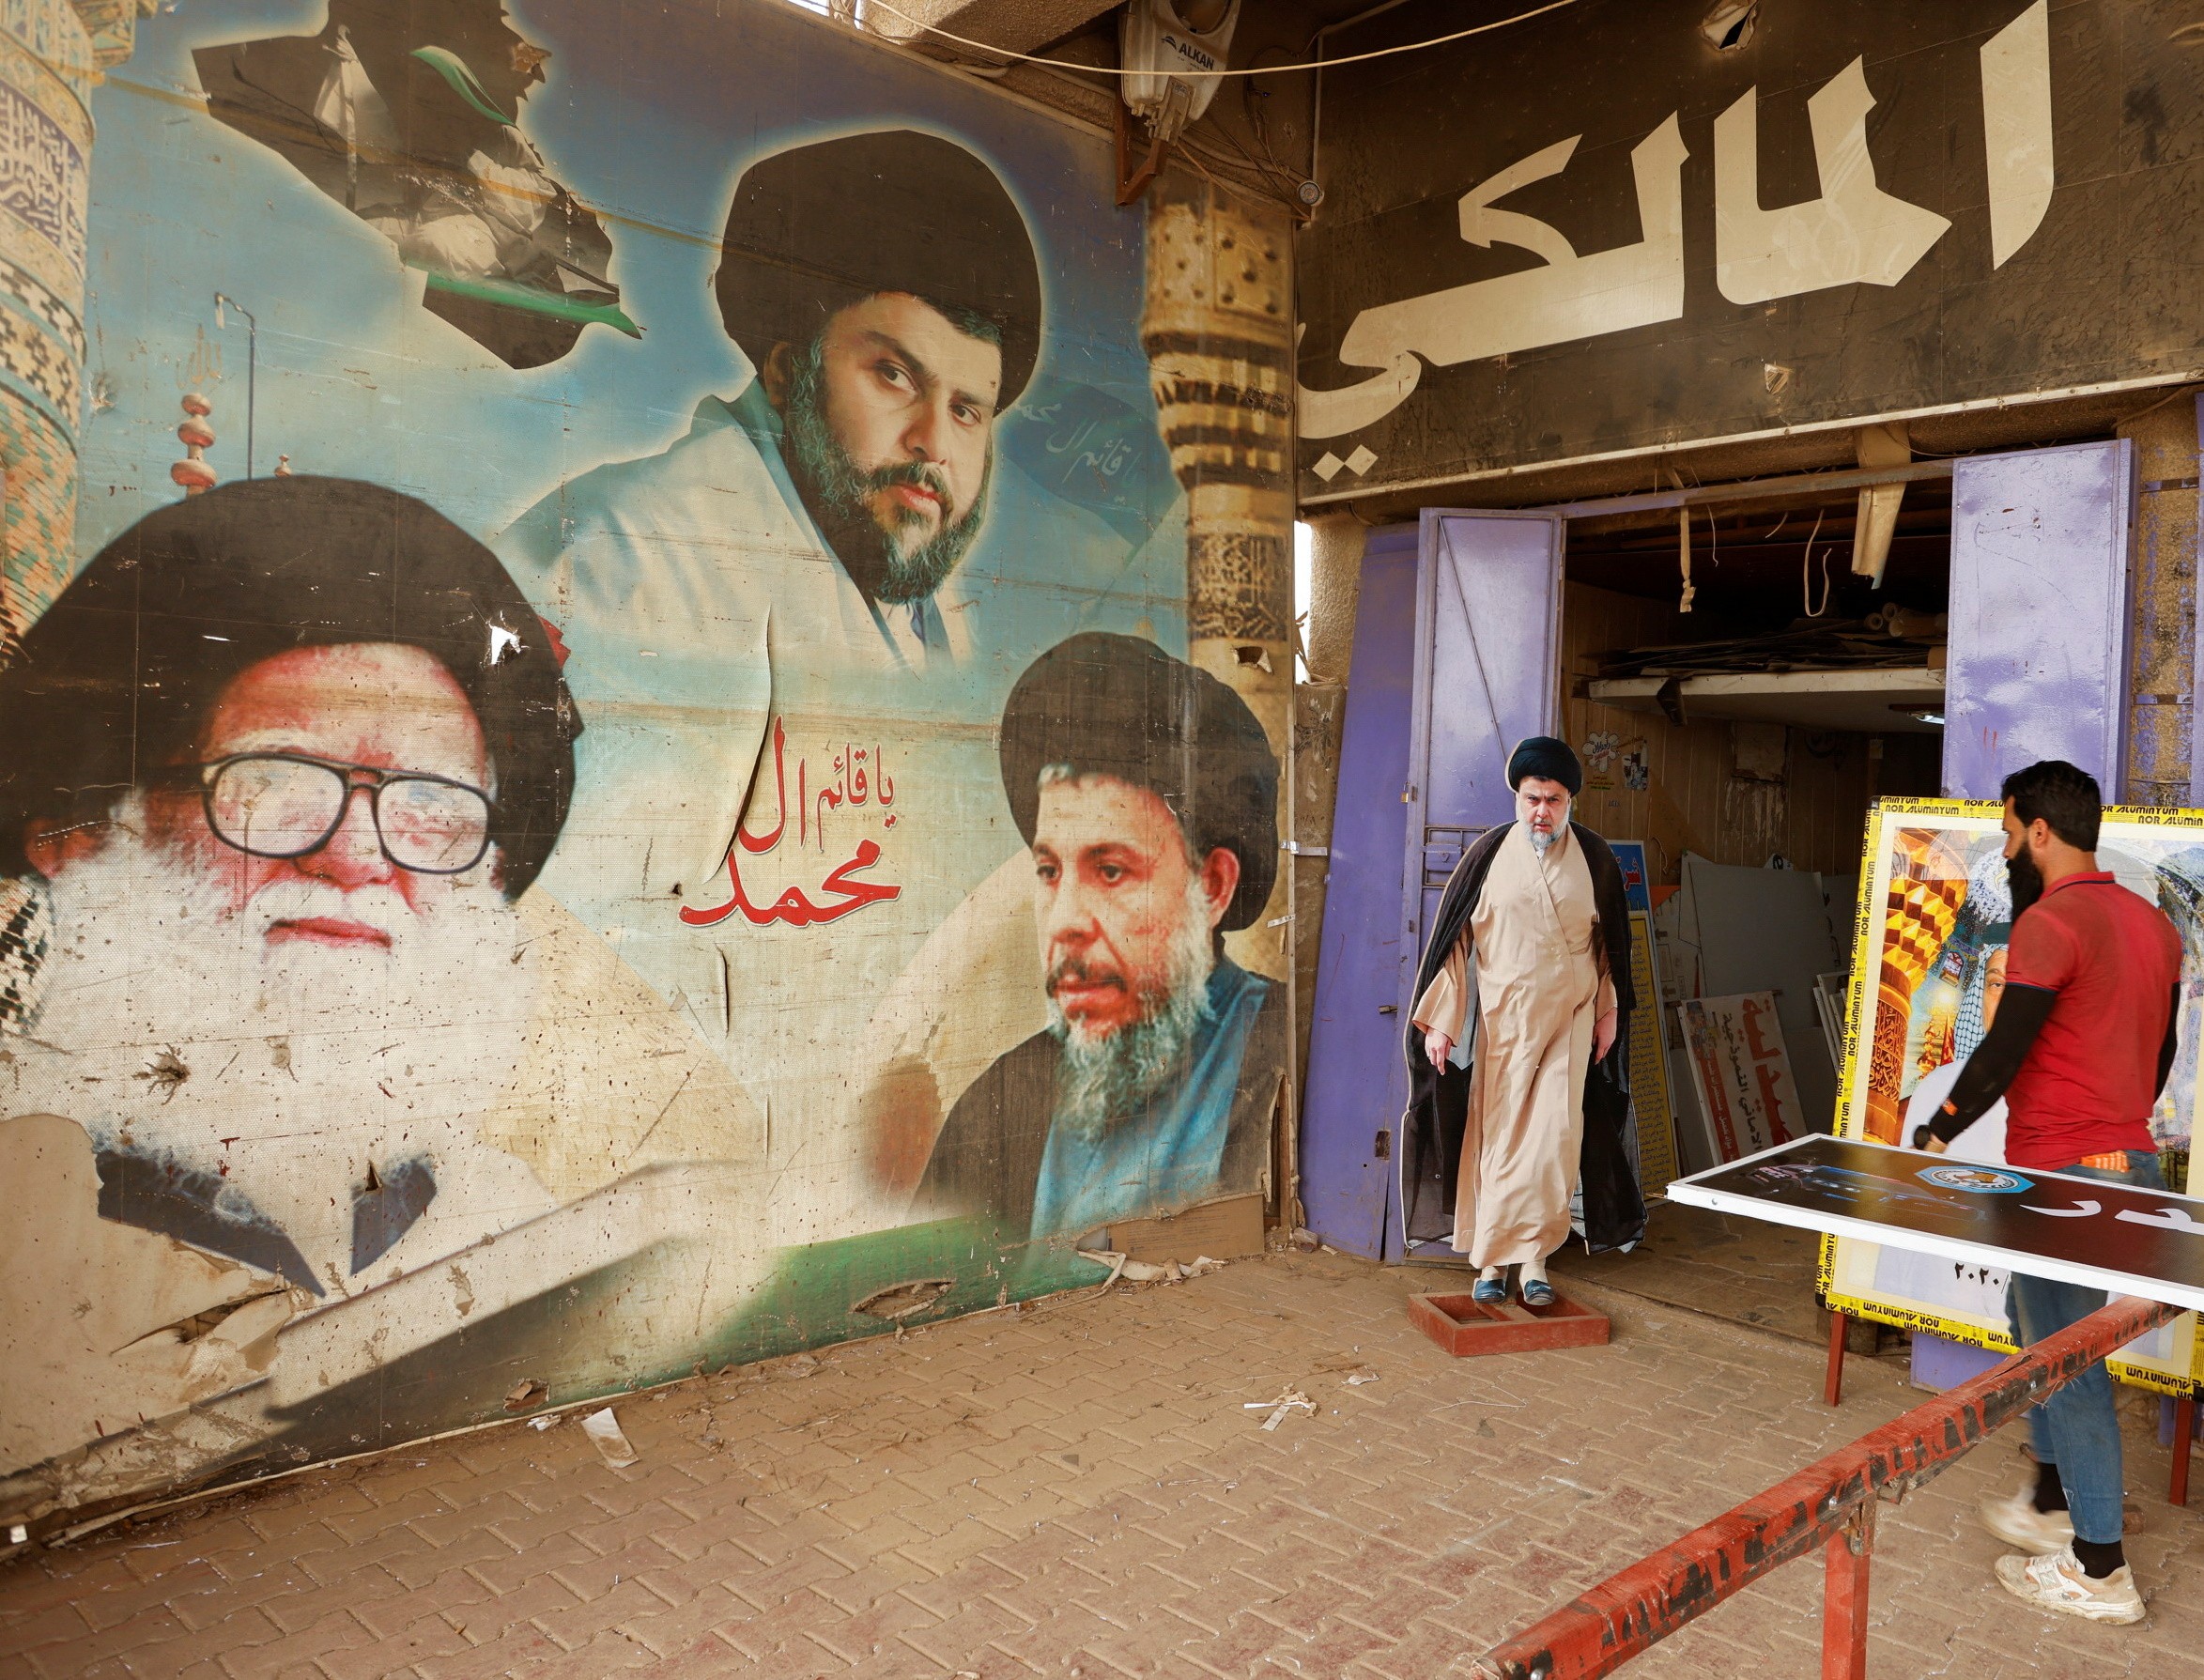 A man walks near a poster of Muqtada al-Sadr, in the Sadr City district of Baghdad (Reuters)